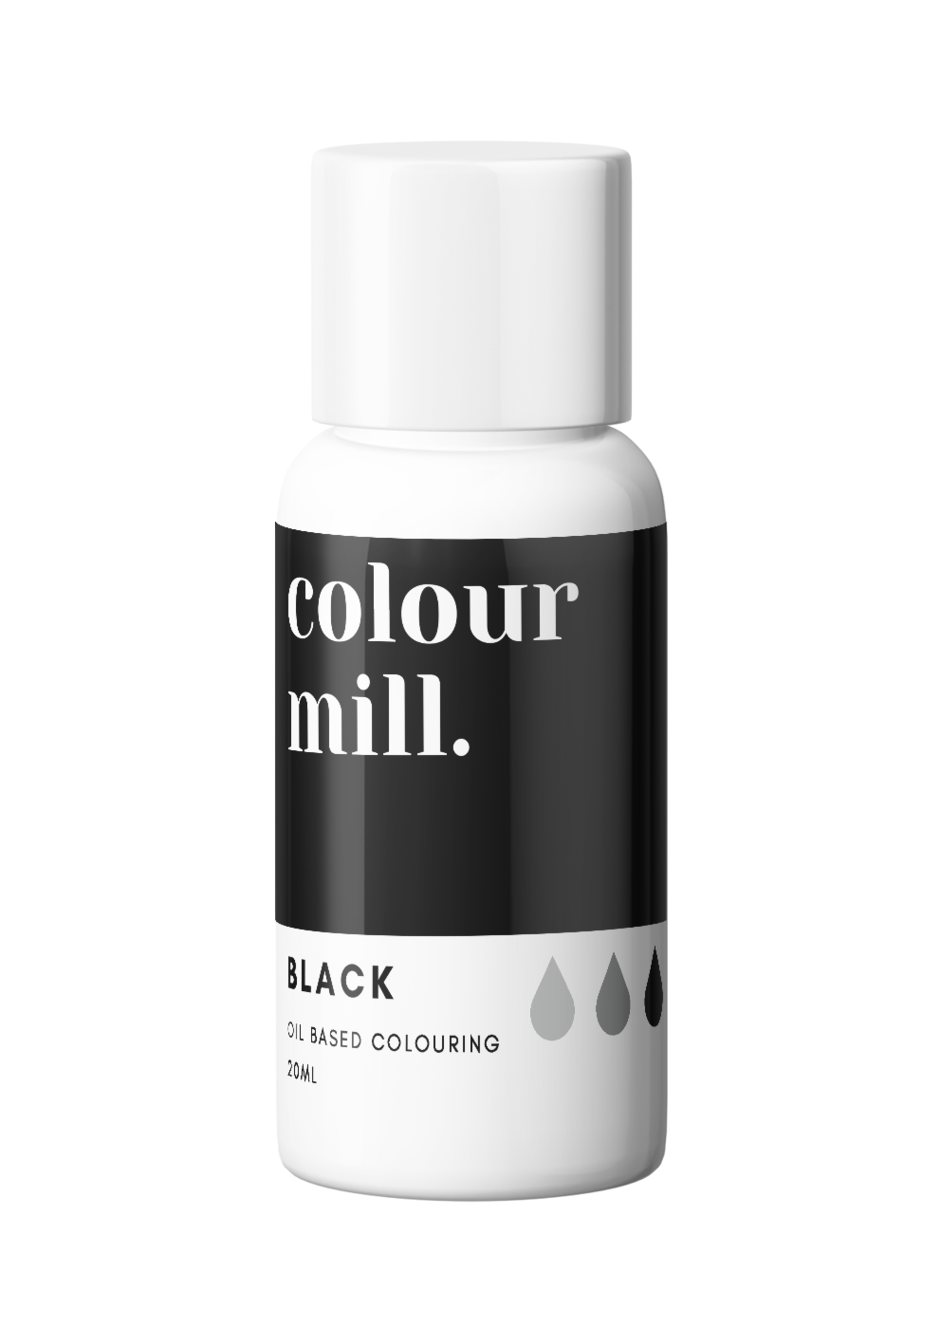 Black, 20ml, Colour Mill Oil Based Colouring